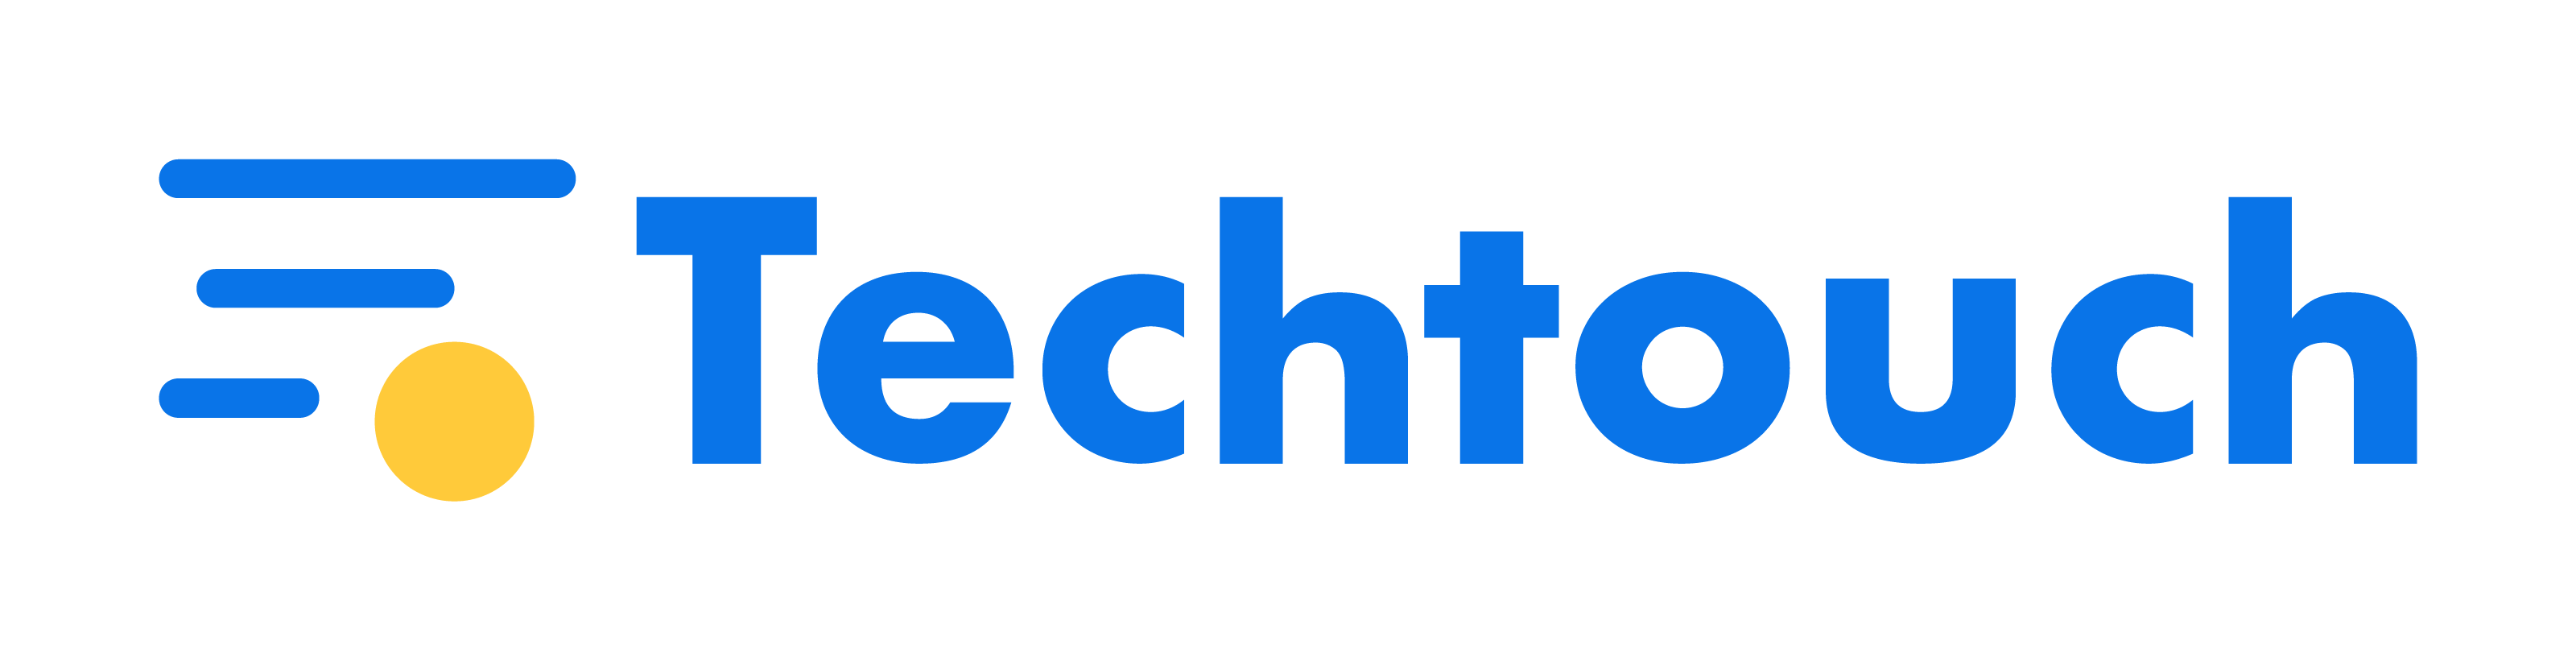 Techtouch, Inc. Logo